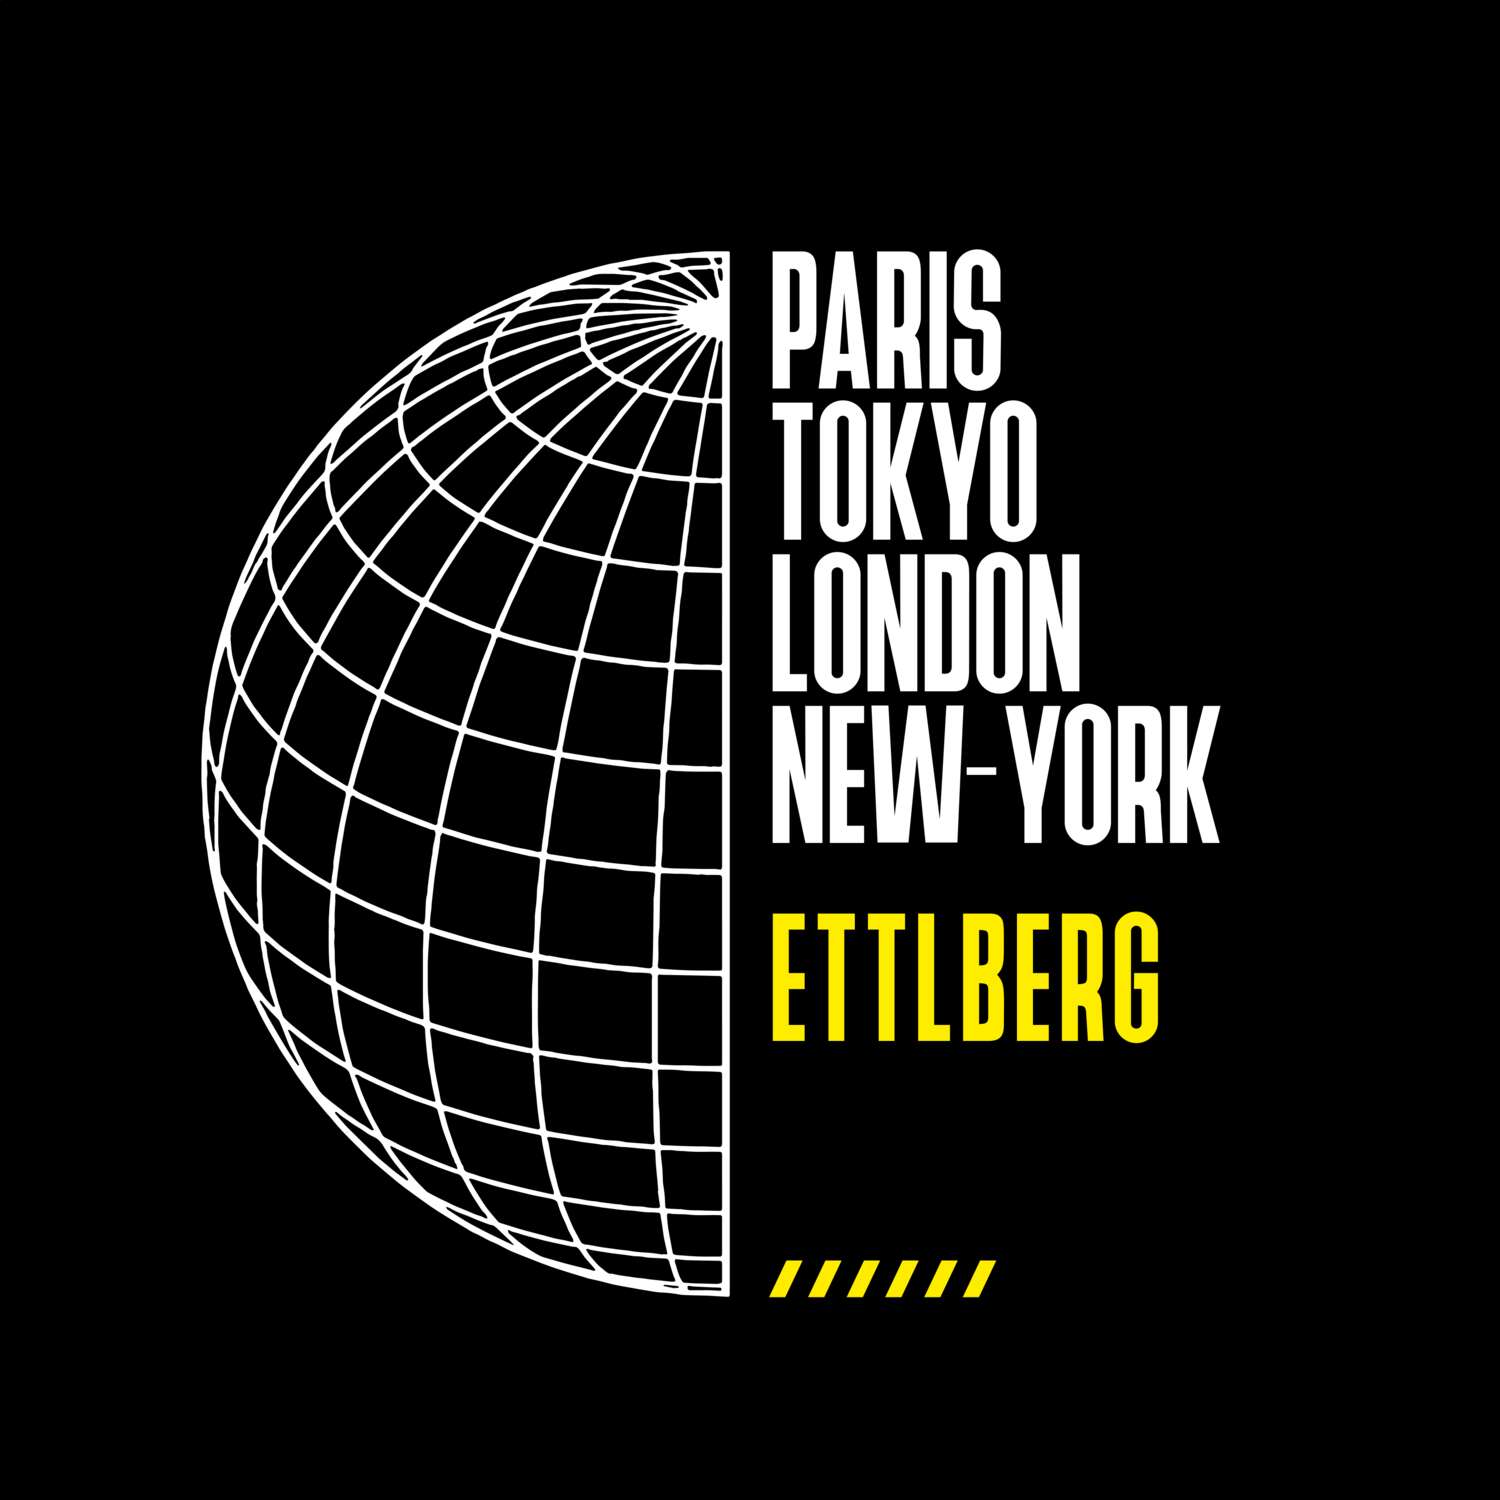 Ettlberg T-Shirt »Paris Tokyo London«